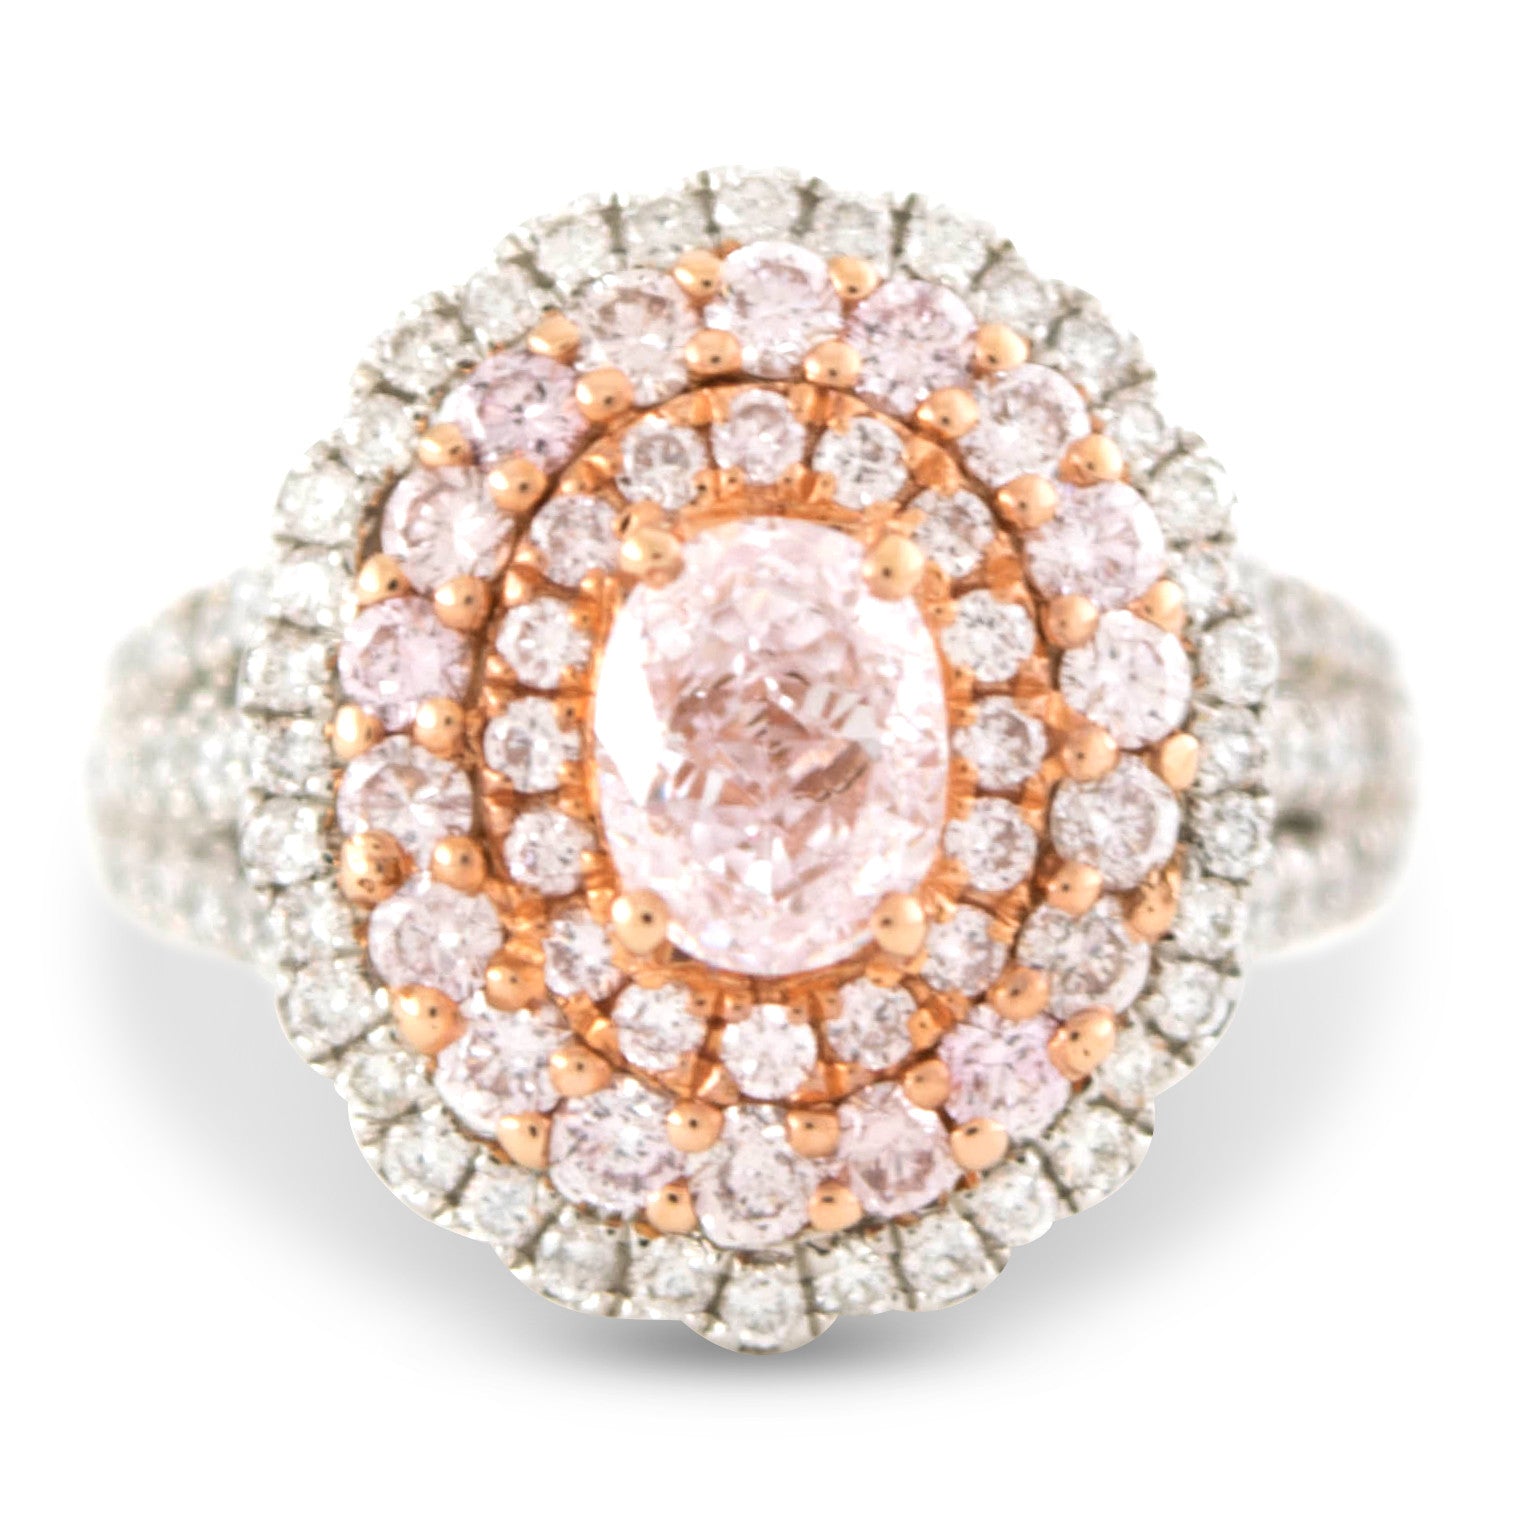 Charlotte Oval Pink Diamond Ring | The Jewel Princess